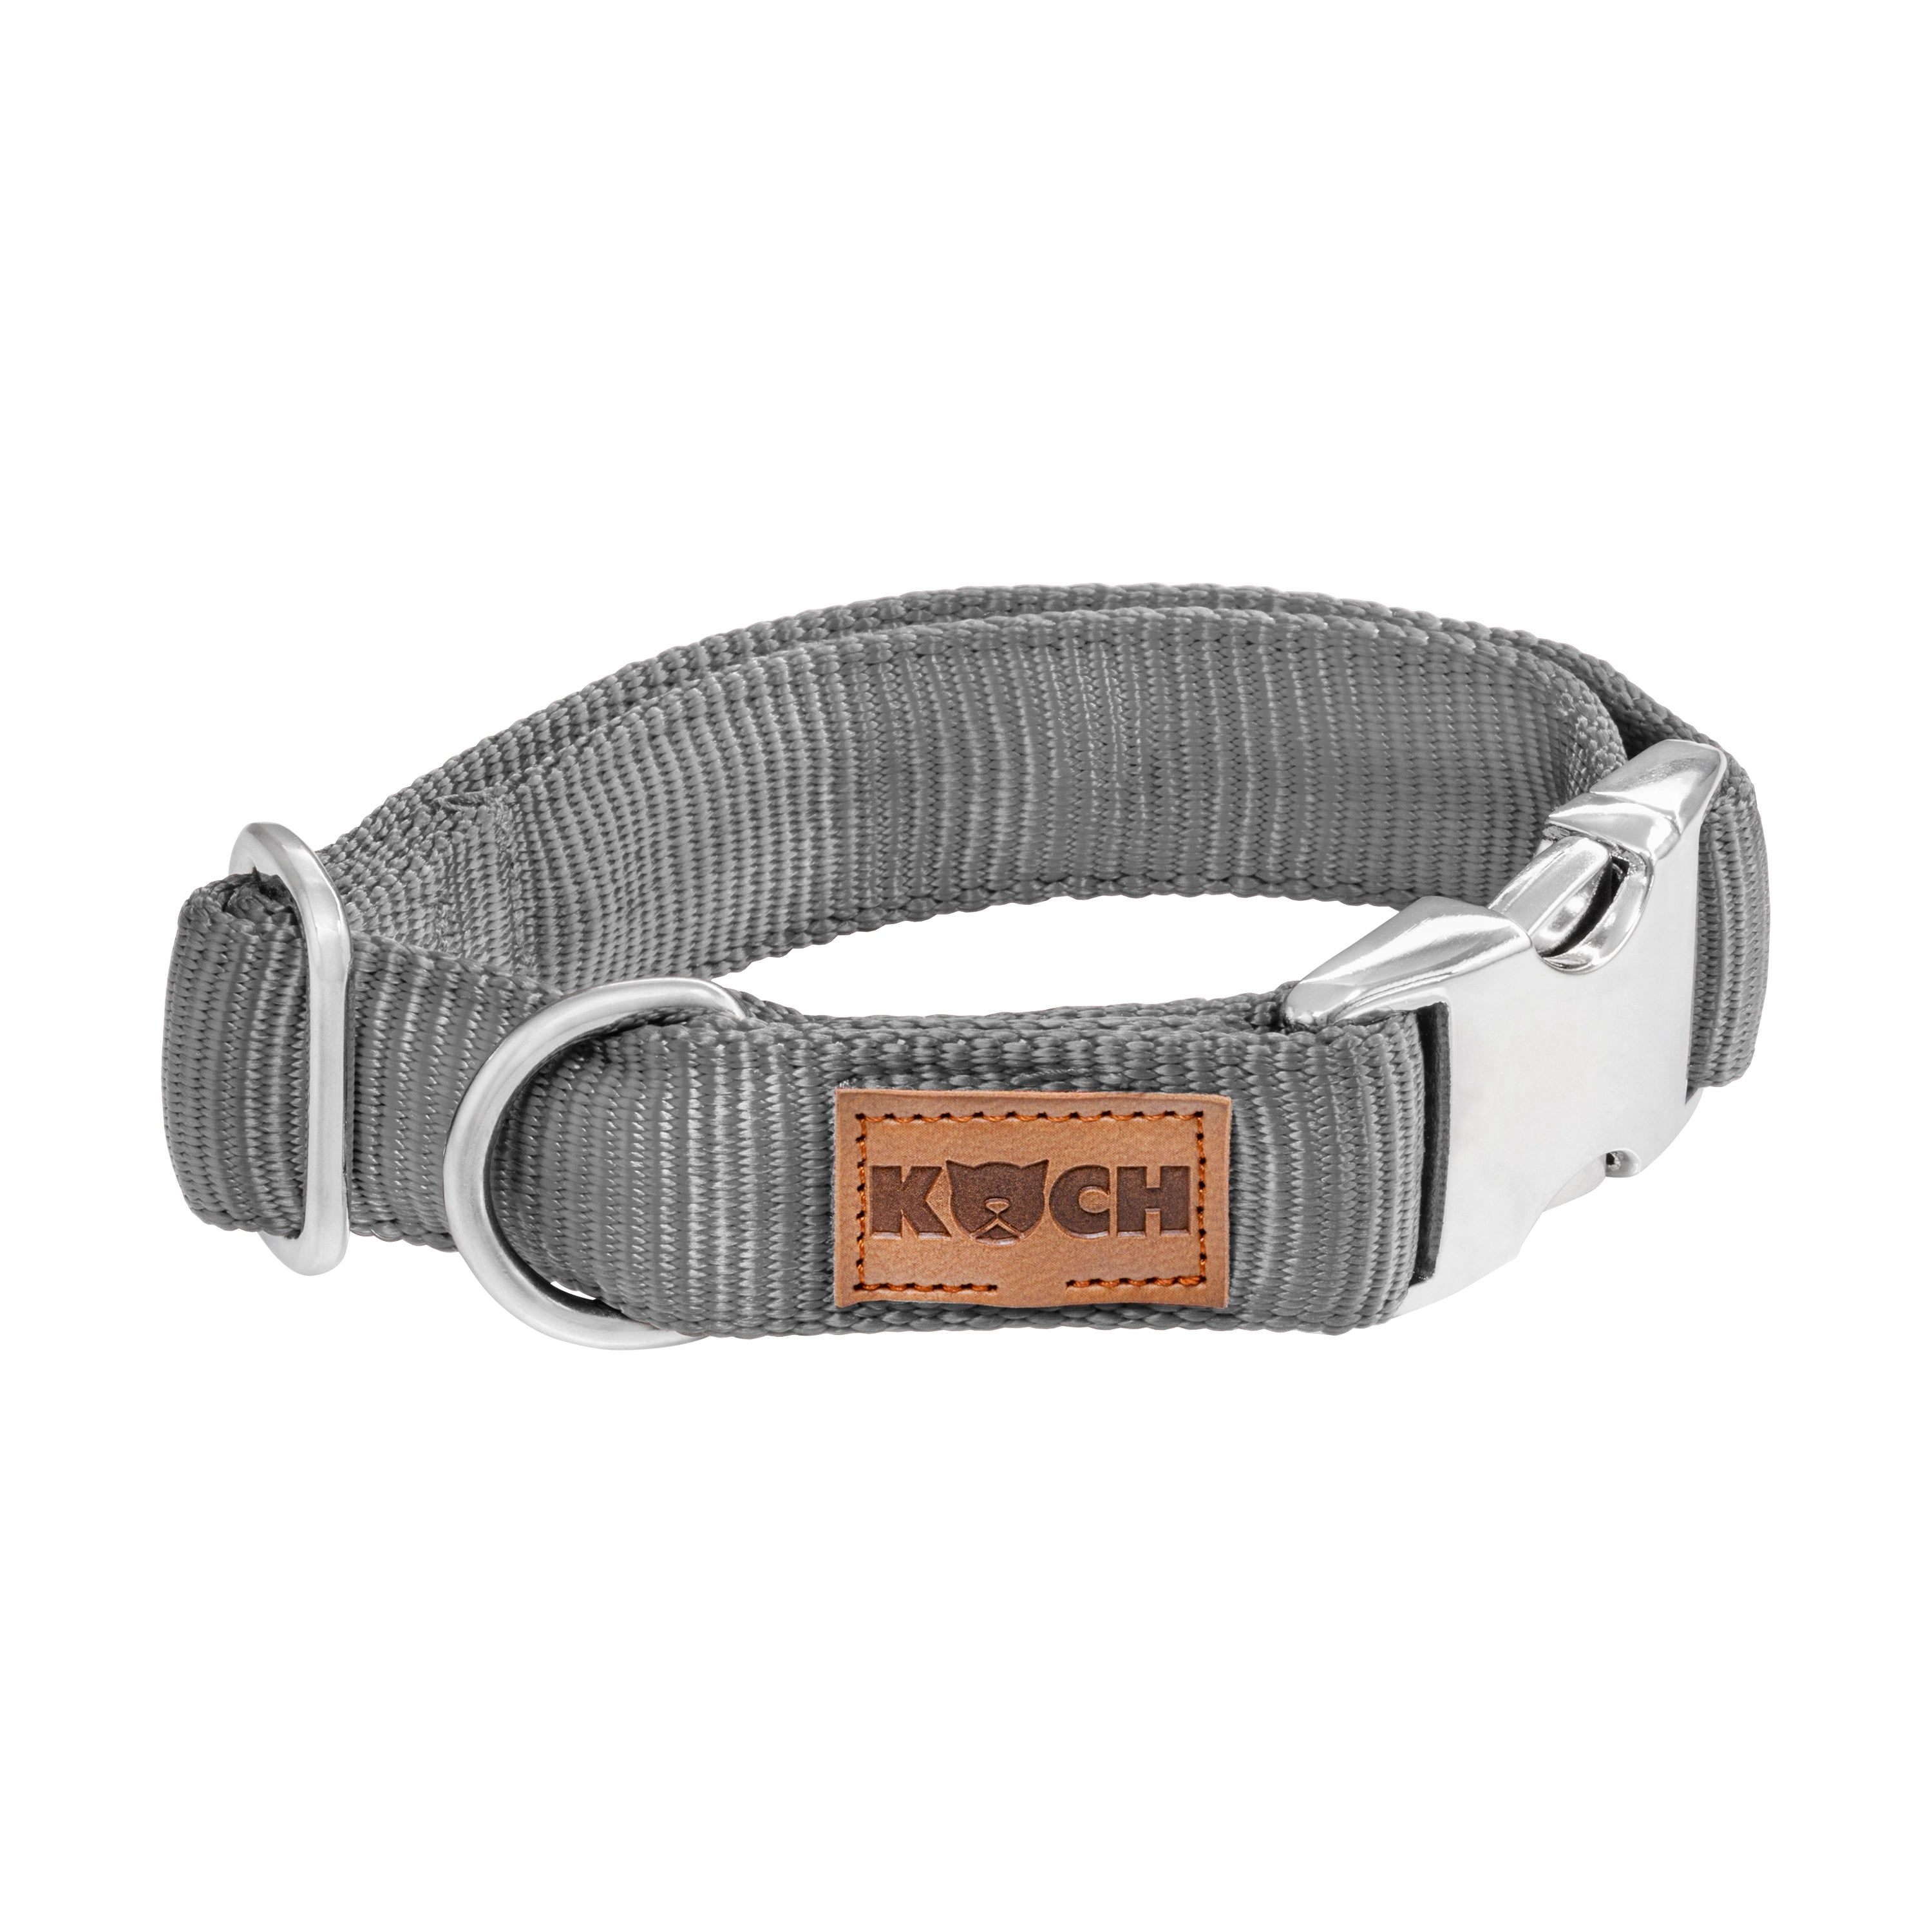 KOCH Premium Alu-Klick Hundehalsband gepolstert grau #farbe_grau